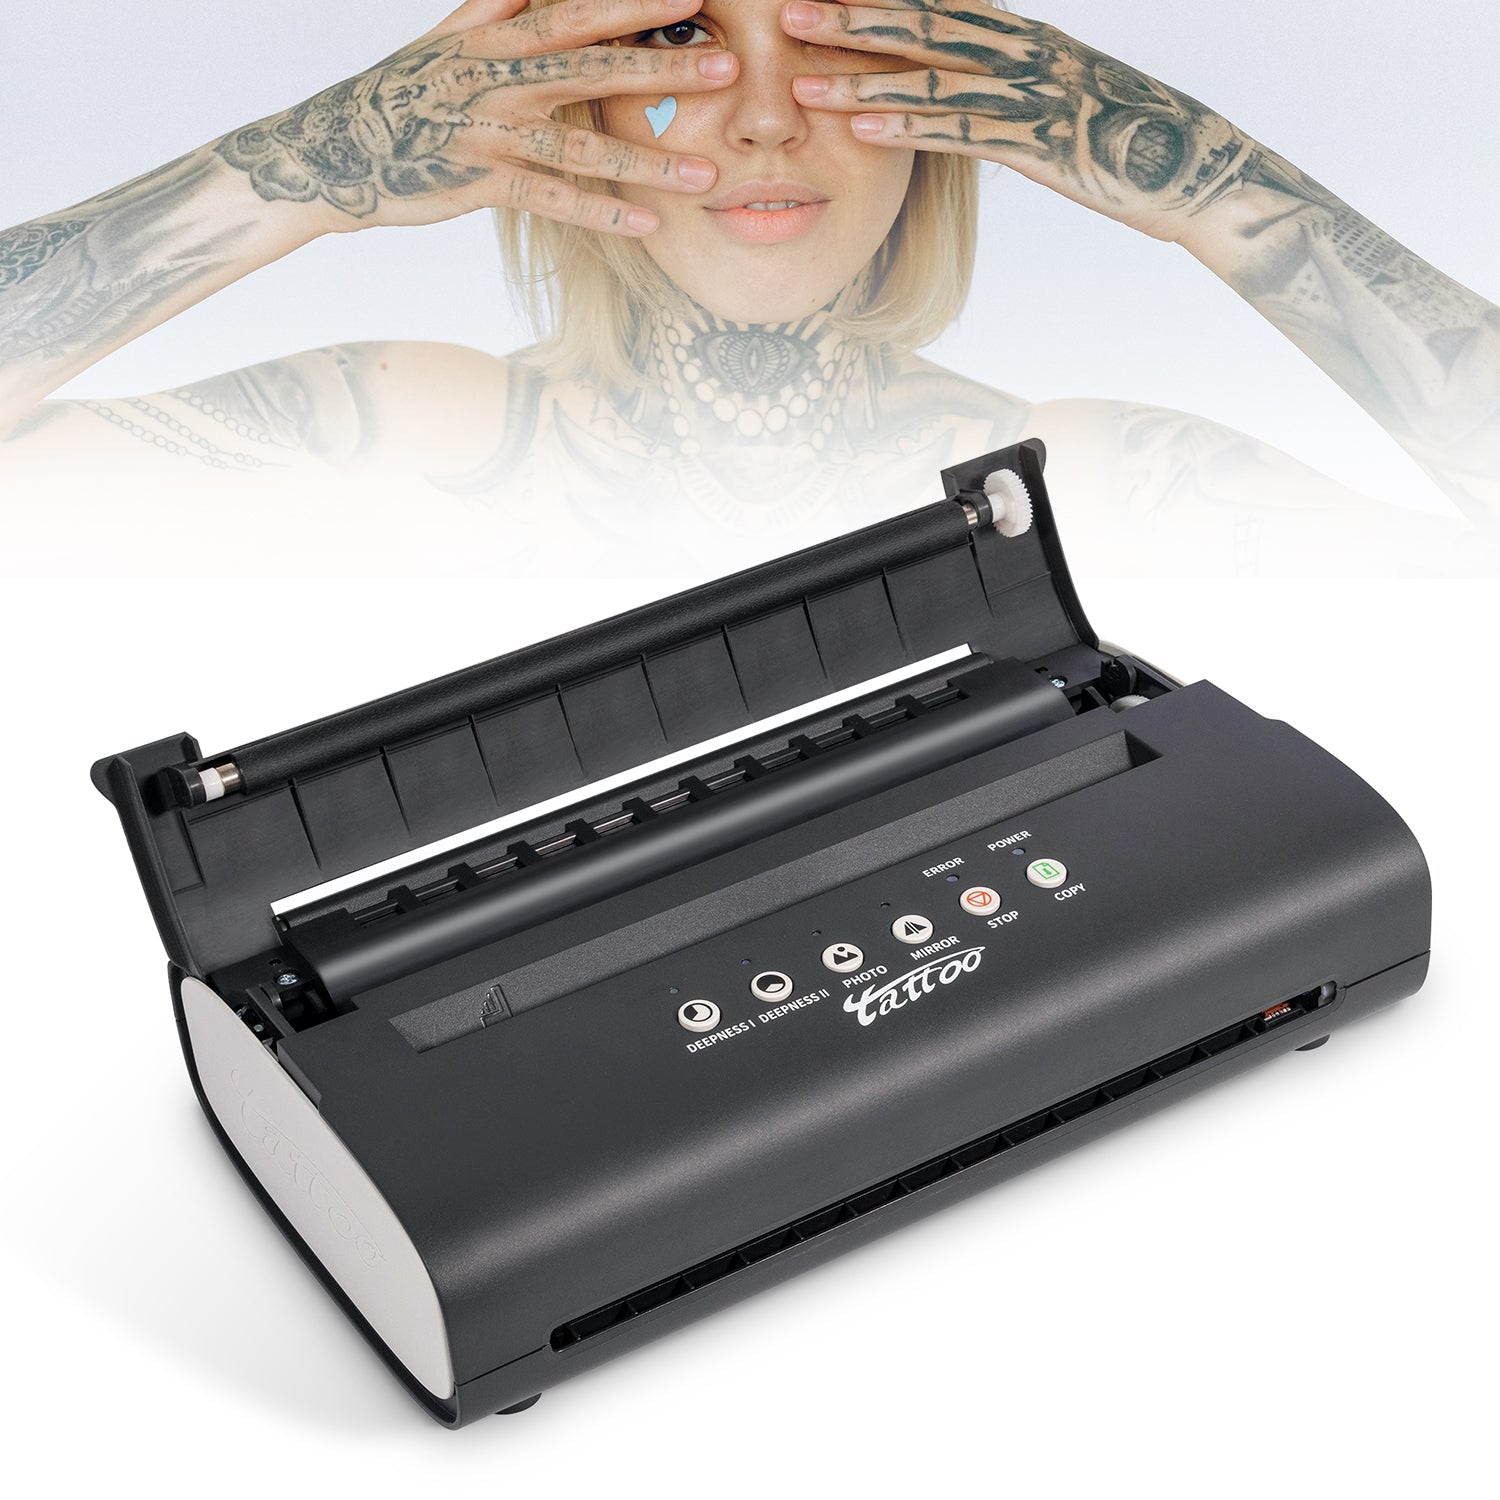 InkJet Tattoo Stencil Printer Complete Combo Package at Joker